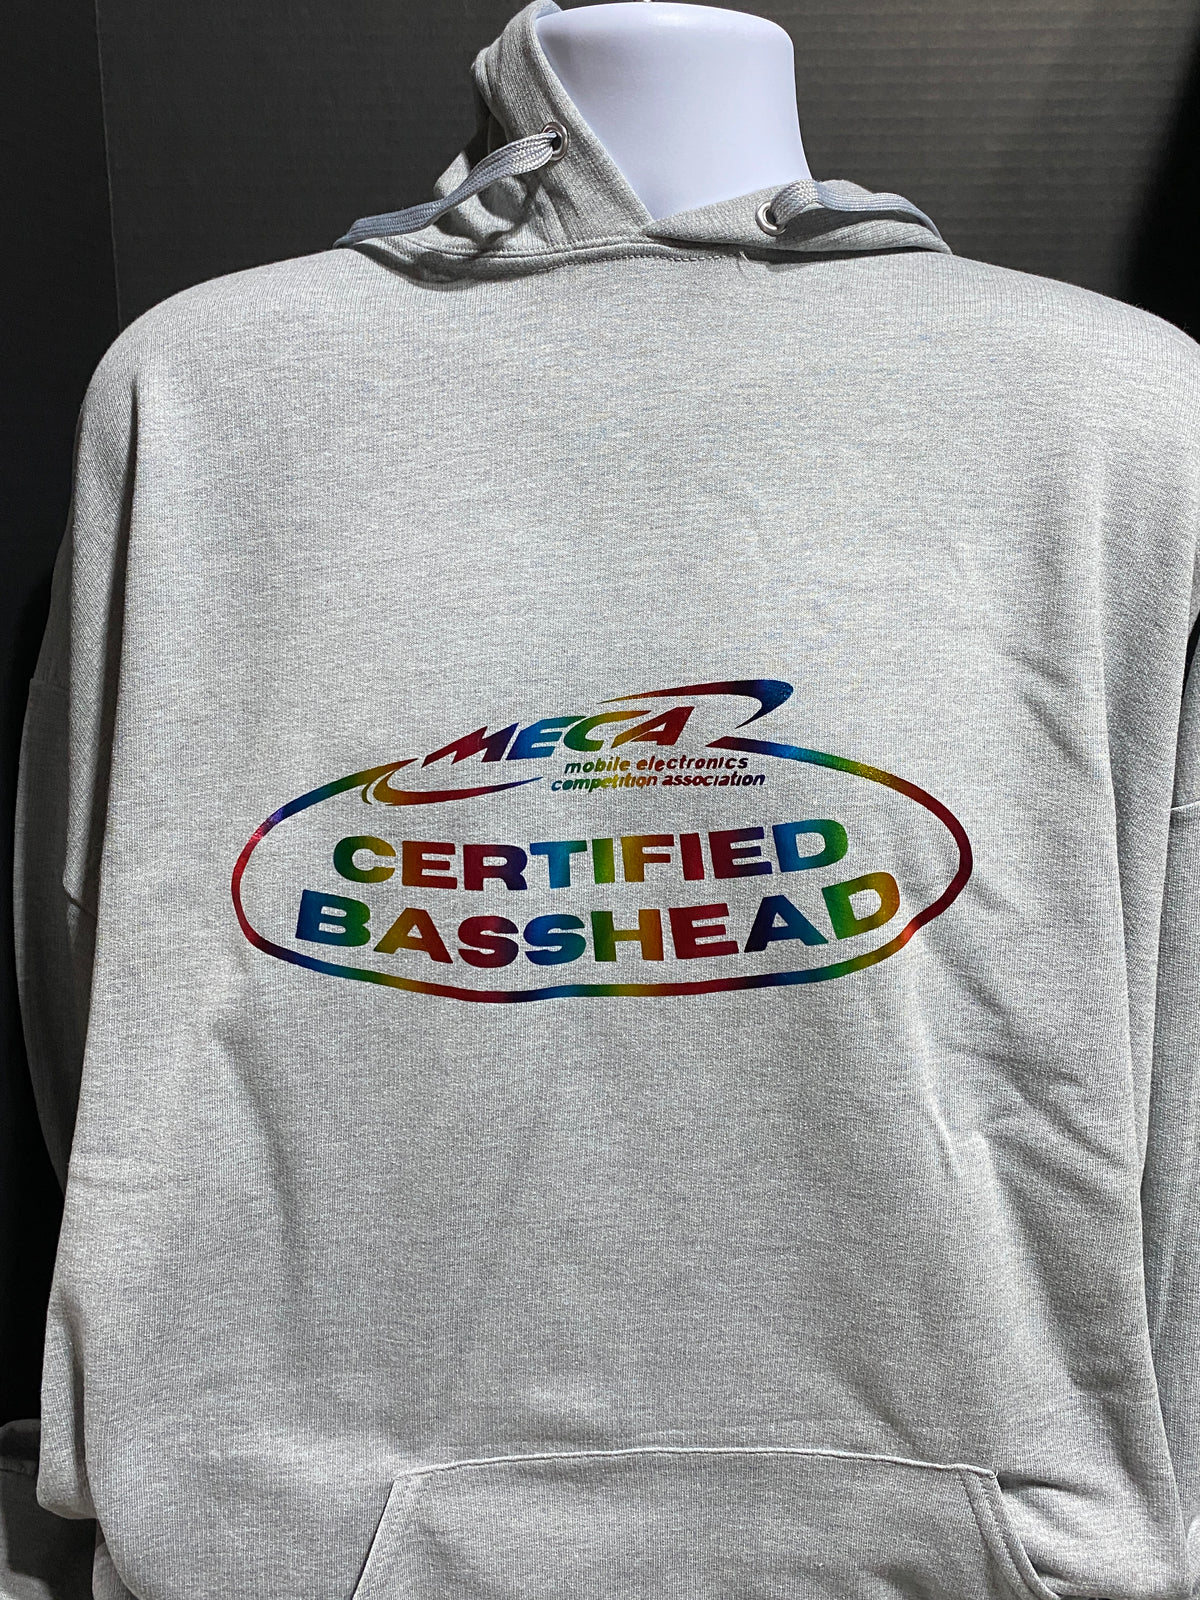 MECA Certified Basshead